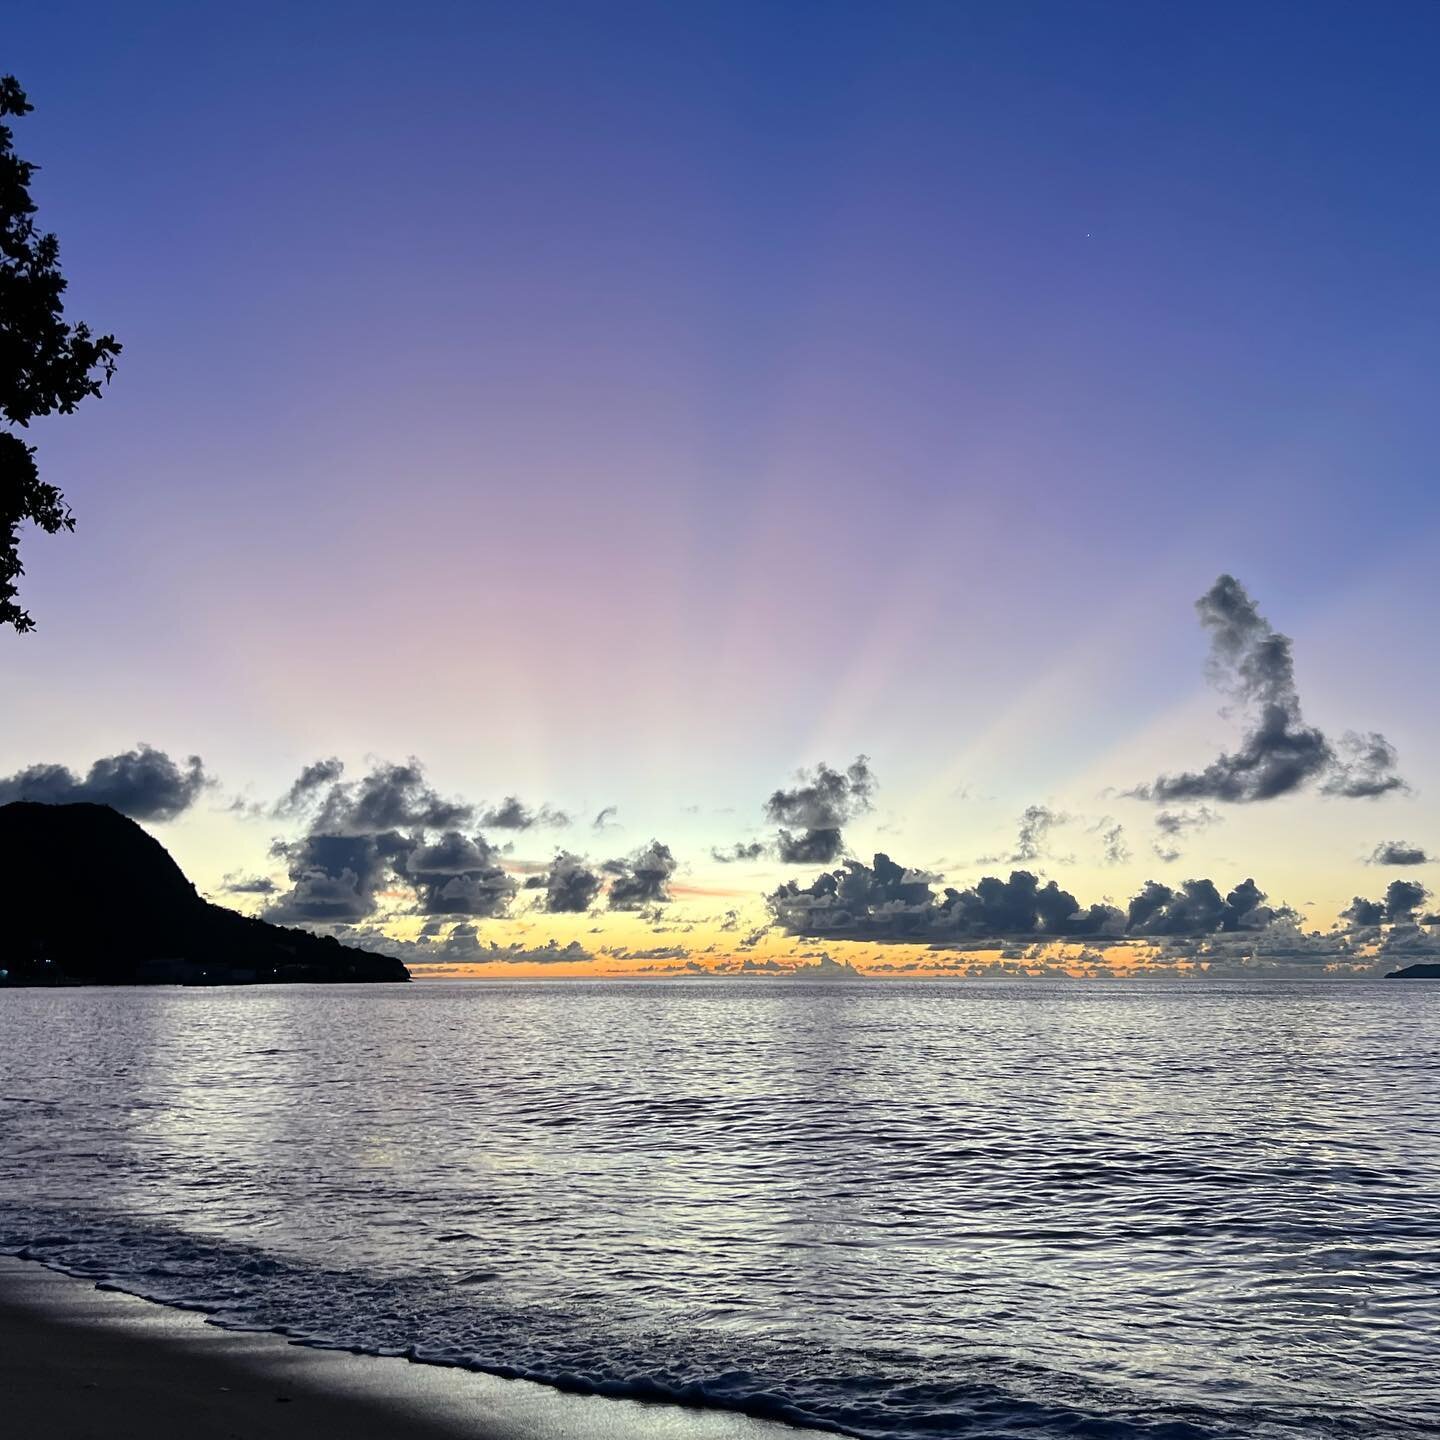 Seychelles Sunset.
The perfect weather is here stay. Come visit Footprints!

#visitseychelles #praslin #whitesandbeach #seychelles #paradisefound #vacationmode #travelideas #seychelles #footprintsseychelles #sunsetseychelles  #sunsetlovers